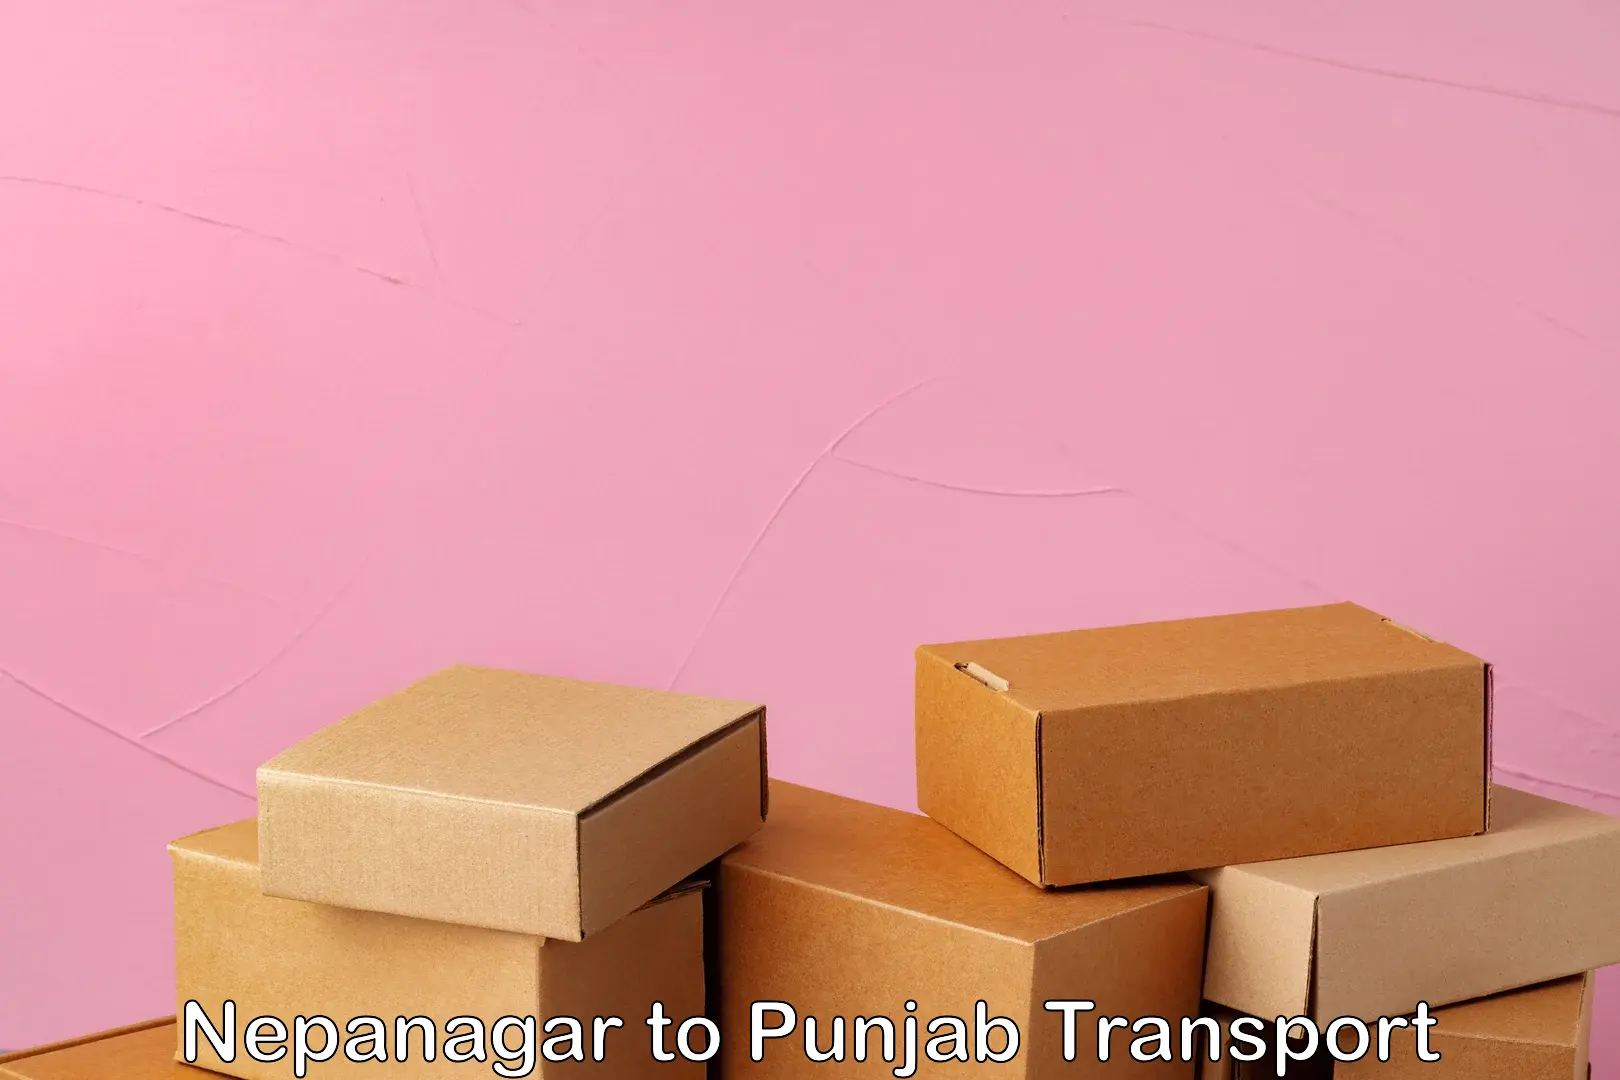 Truck transport companies in India Nepanagar to Punjab